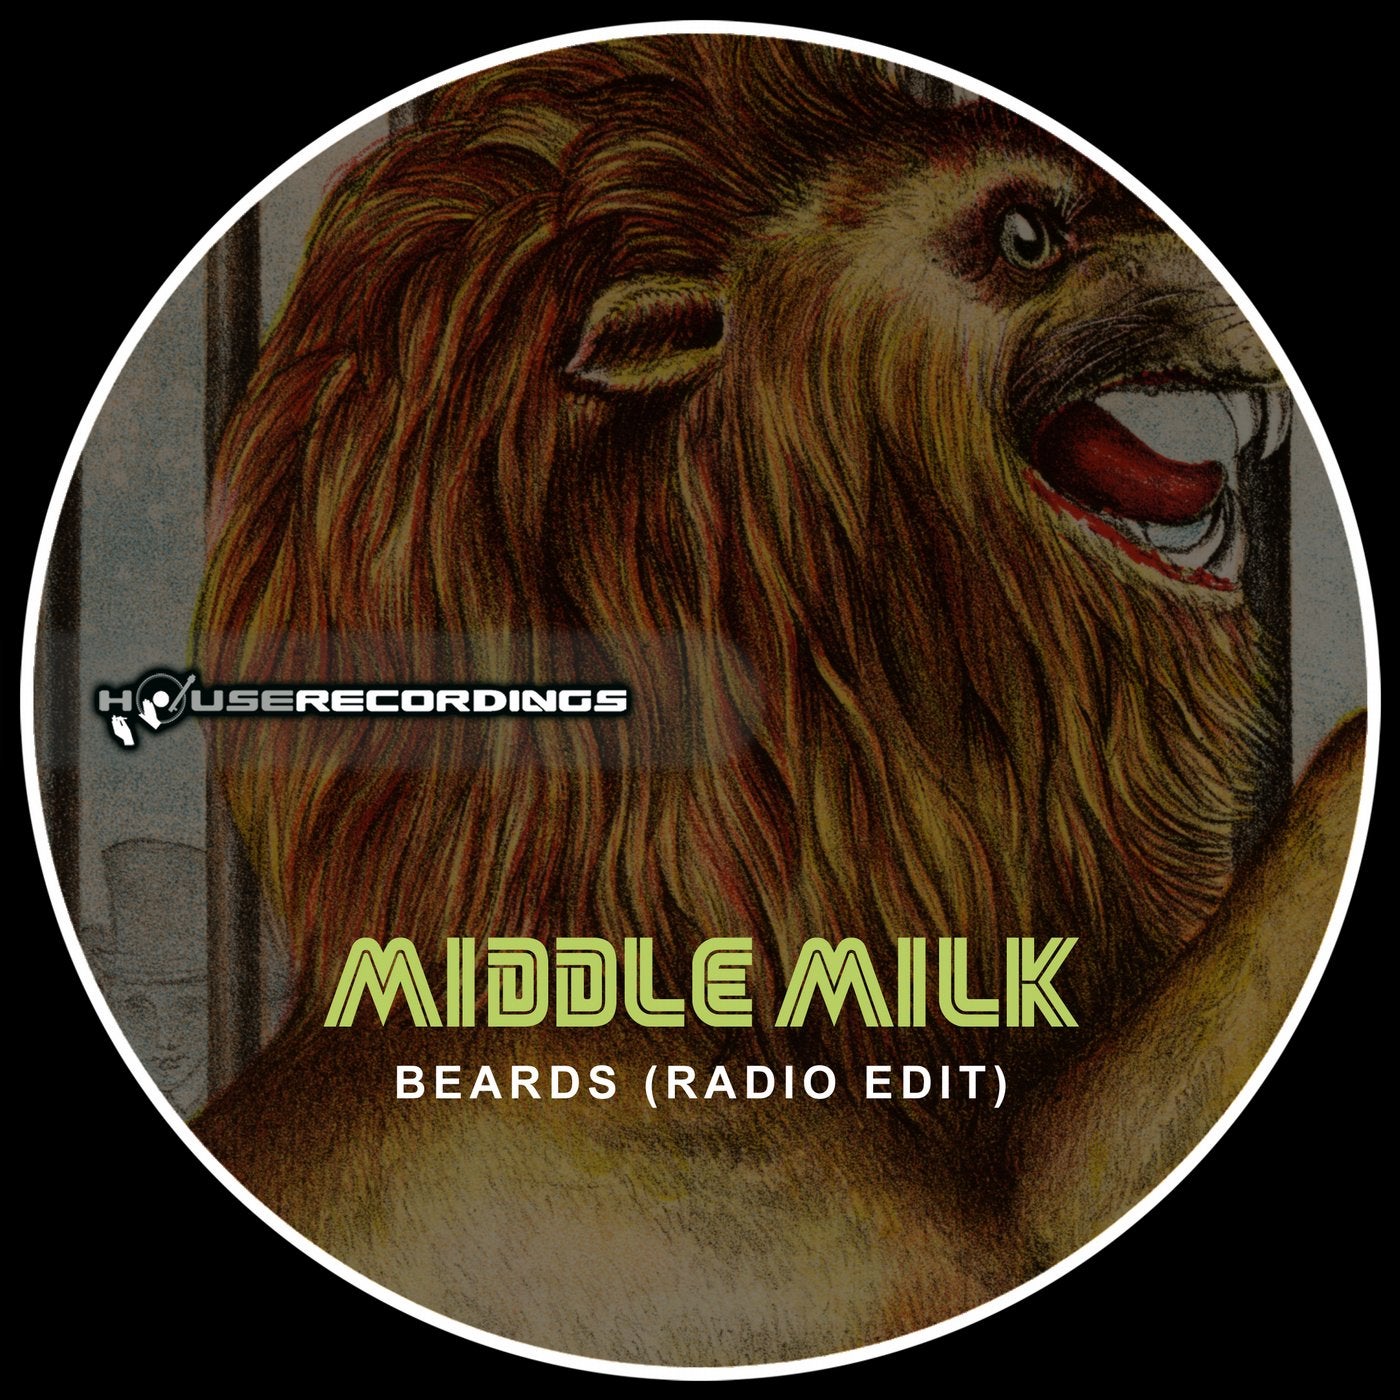 Beards (Radio Edit)